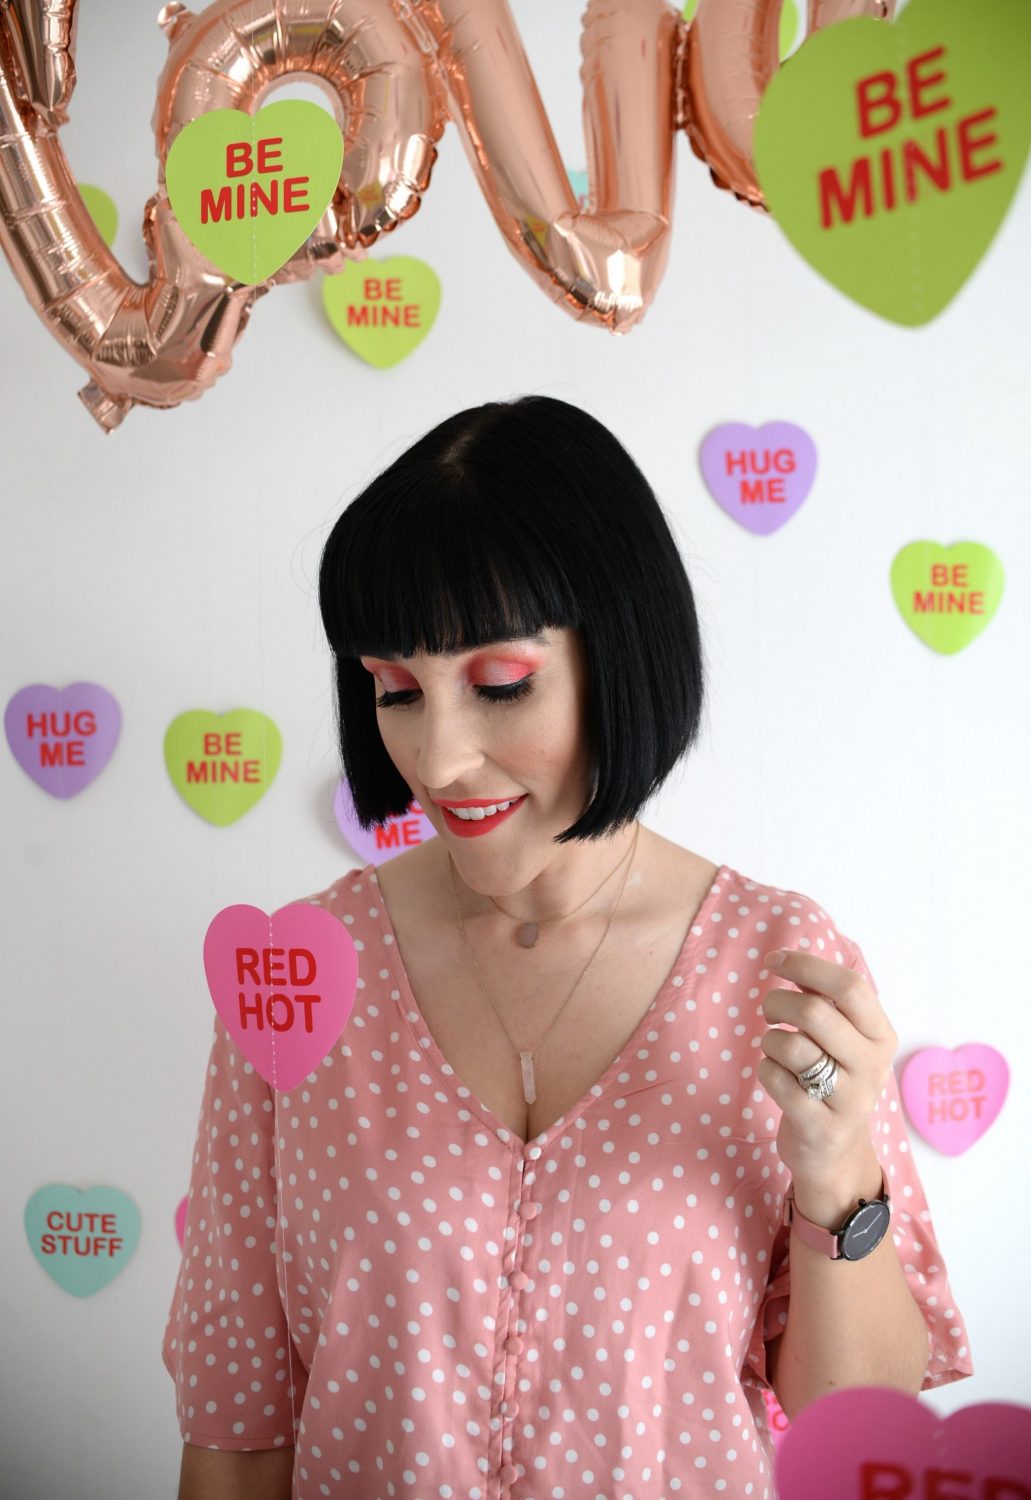 Makeup done by Samantha Blatnicky Makeup & Lash Artist | The Pink Millennial